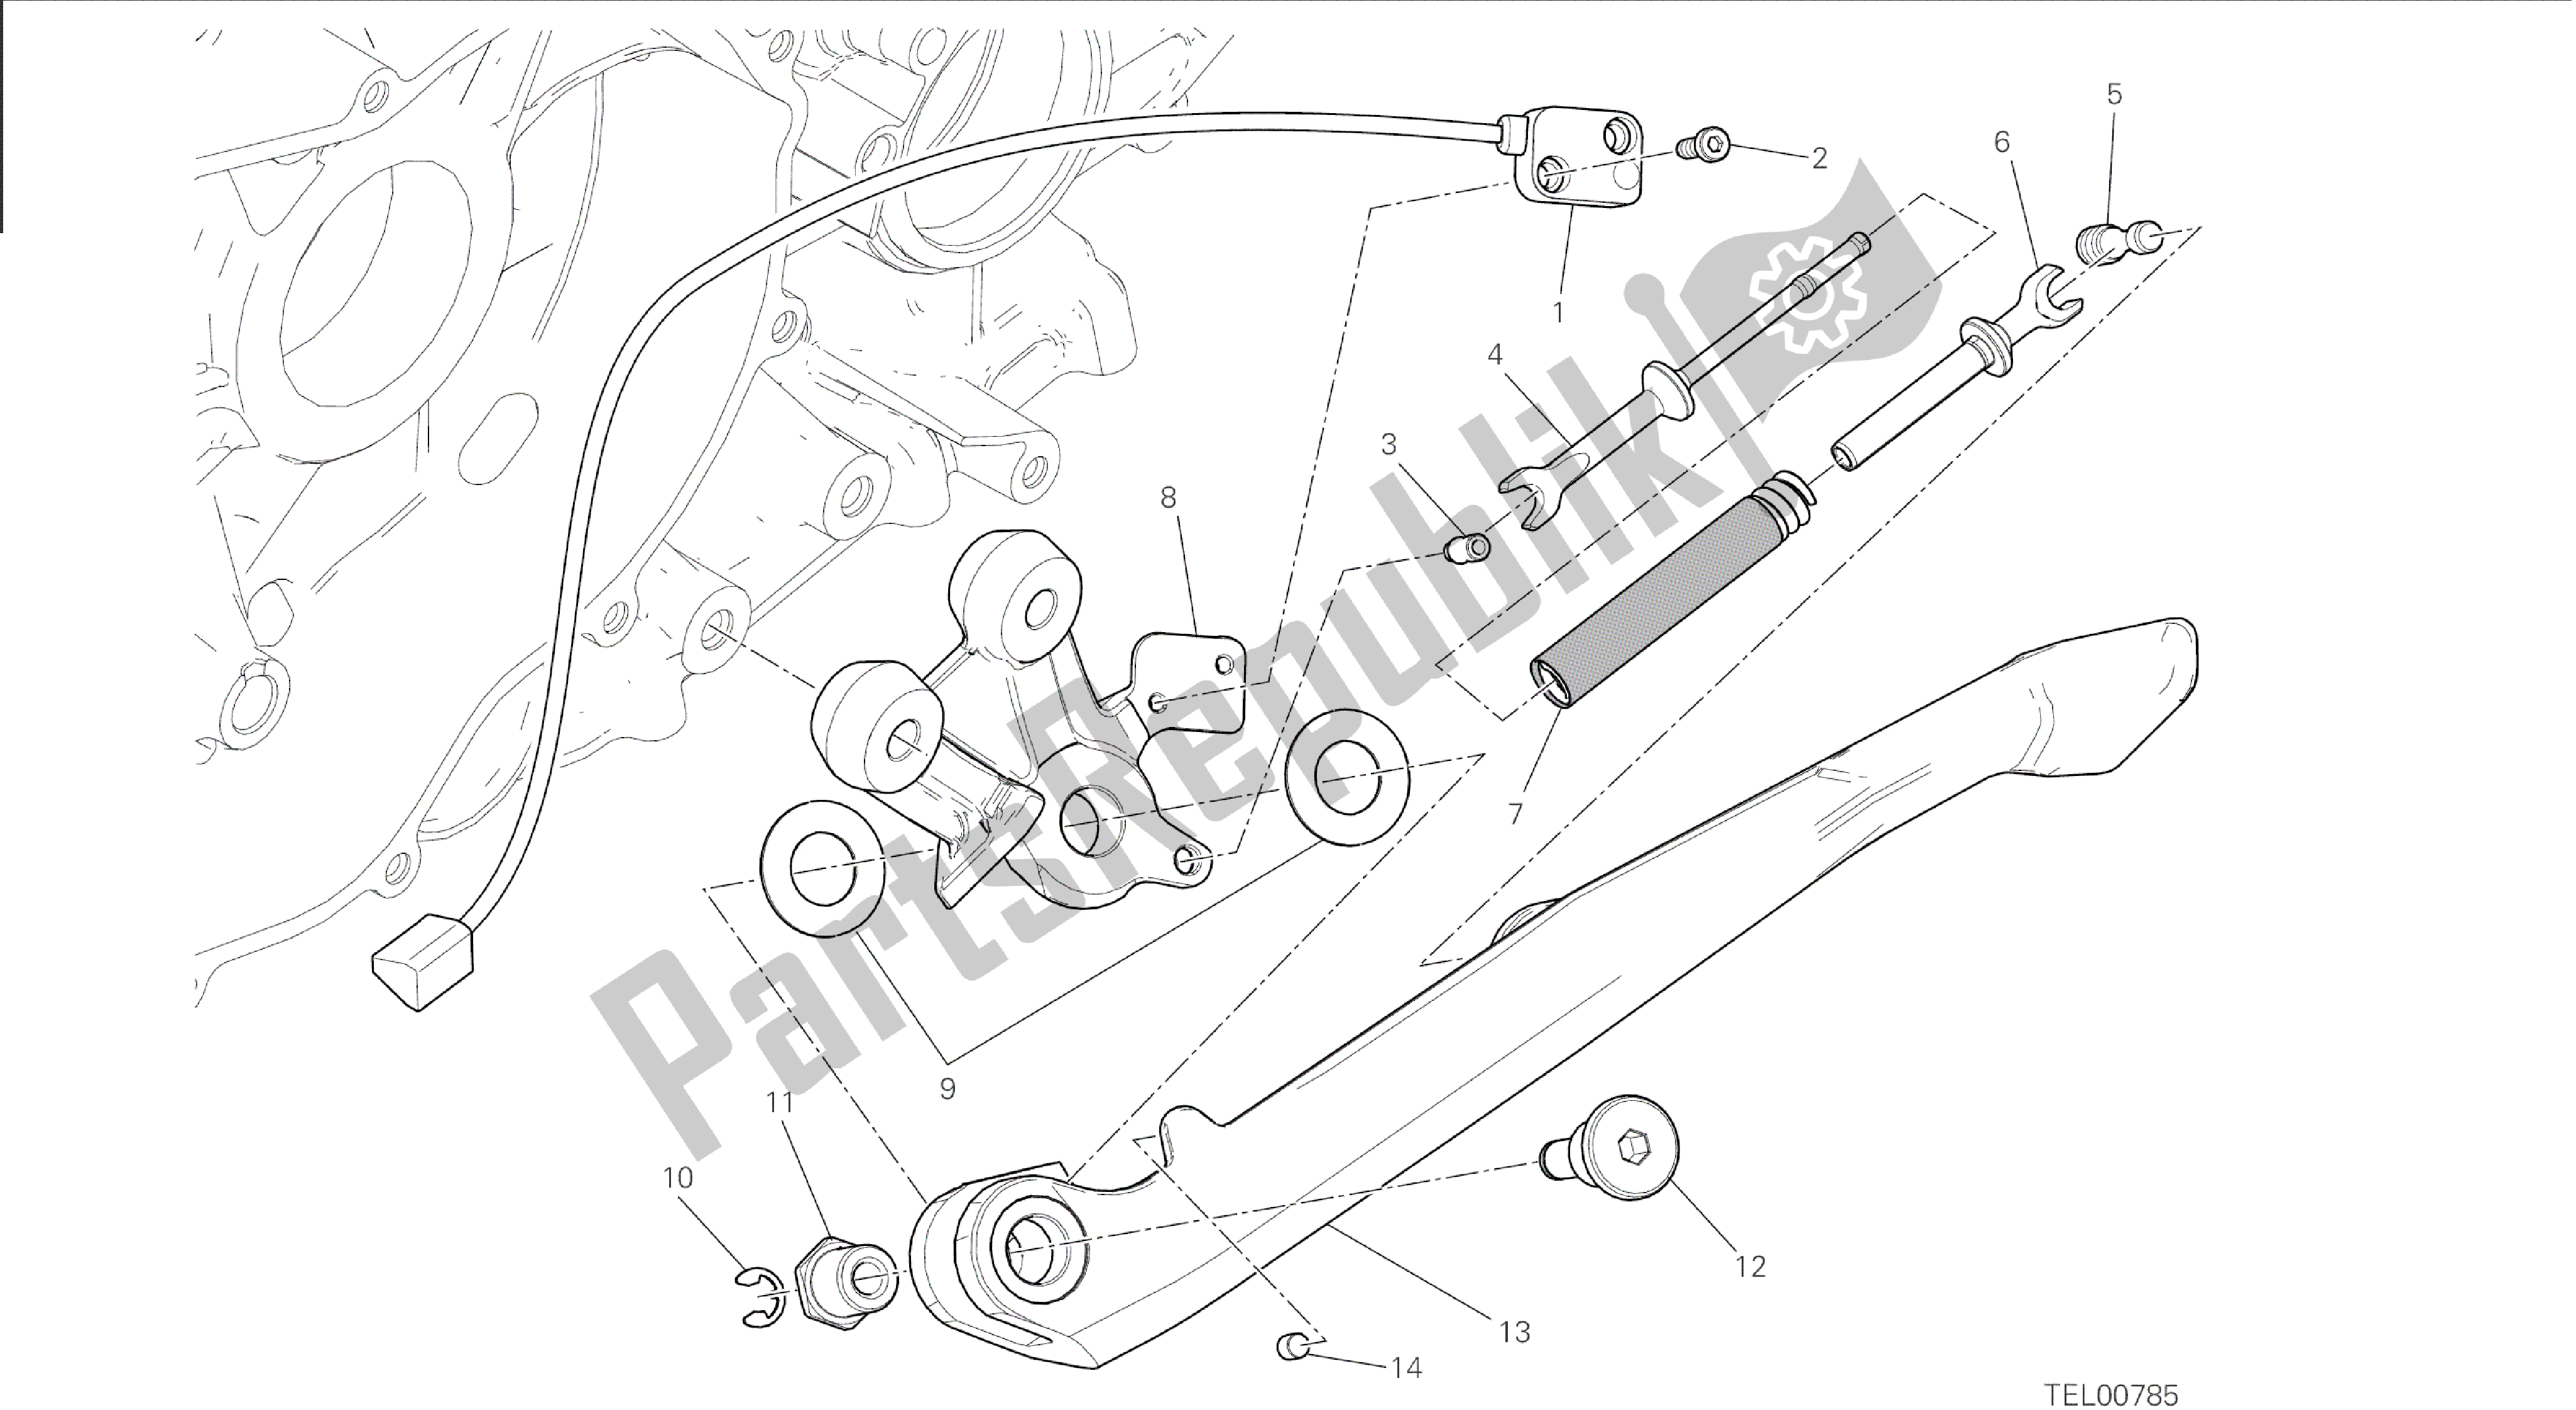 Alle onderdelen voor de Tekening 22a - Standaard [mod: 1199 R; Xst: Aus, Eur, Fra, Jap, Twn] Groepsframe van de Ducati Panigale 1198 2015